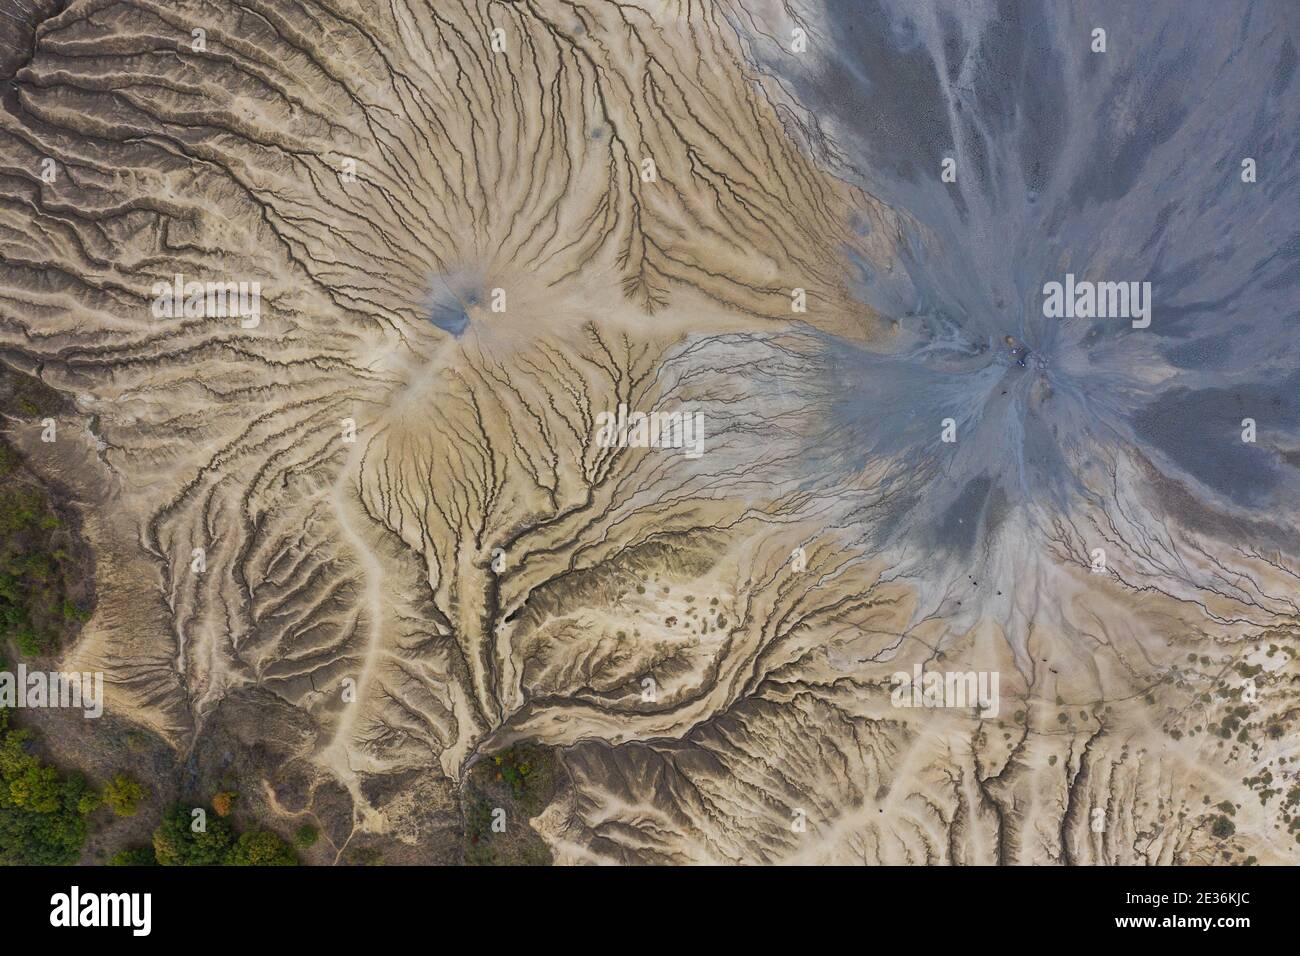 Muddy Volcanoes, Romania. Aerial view of the Buzau county mud volcanoes. Stock Photo